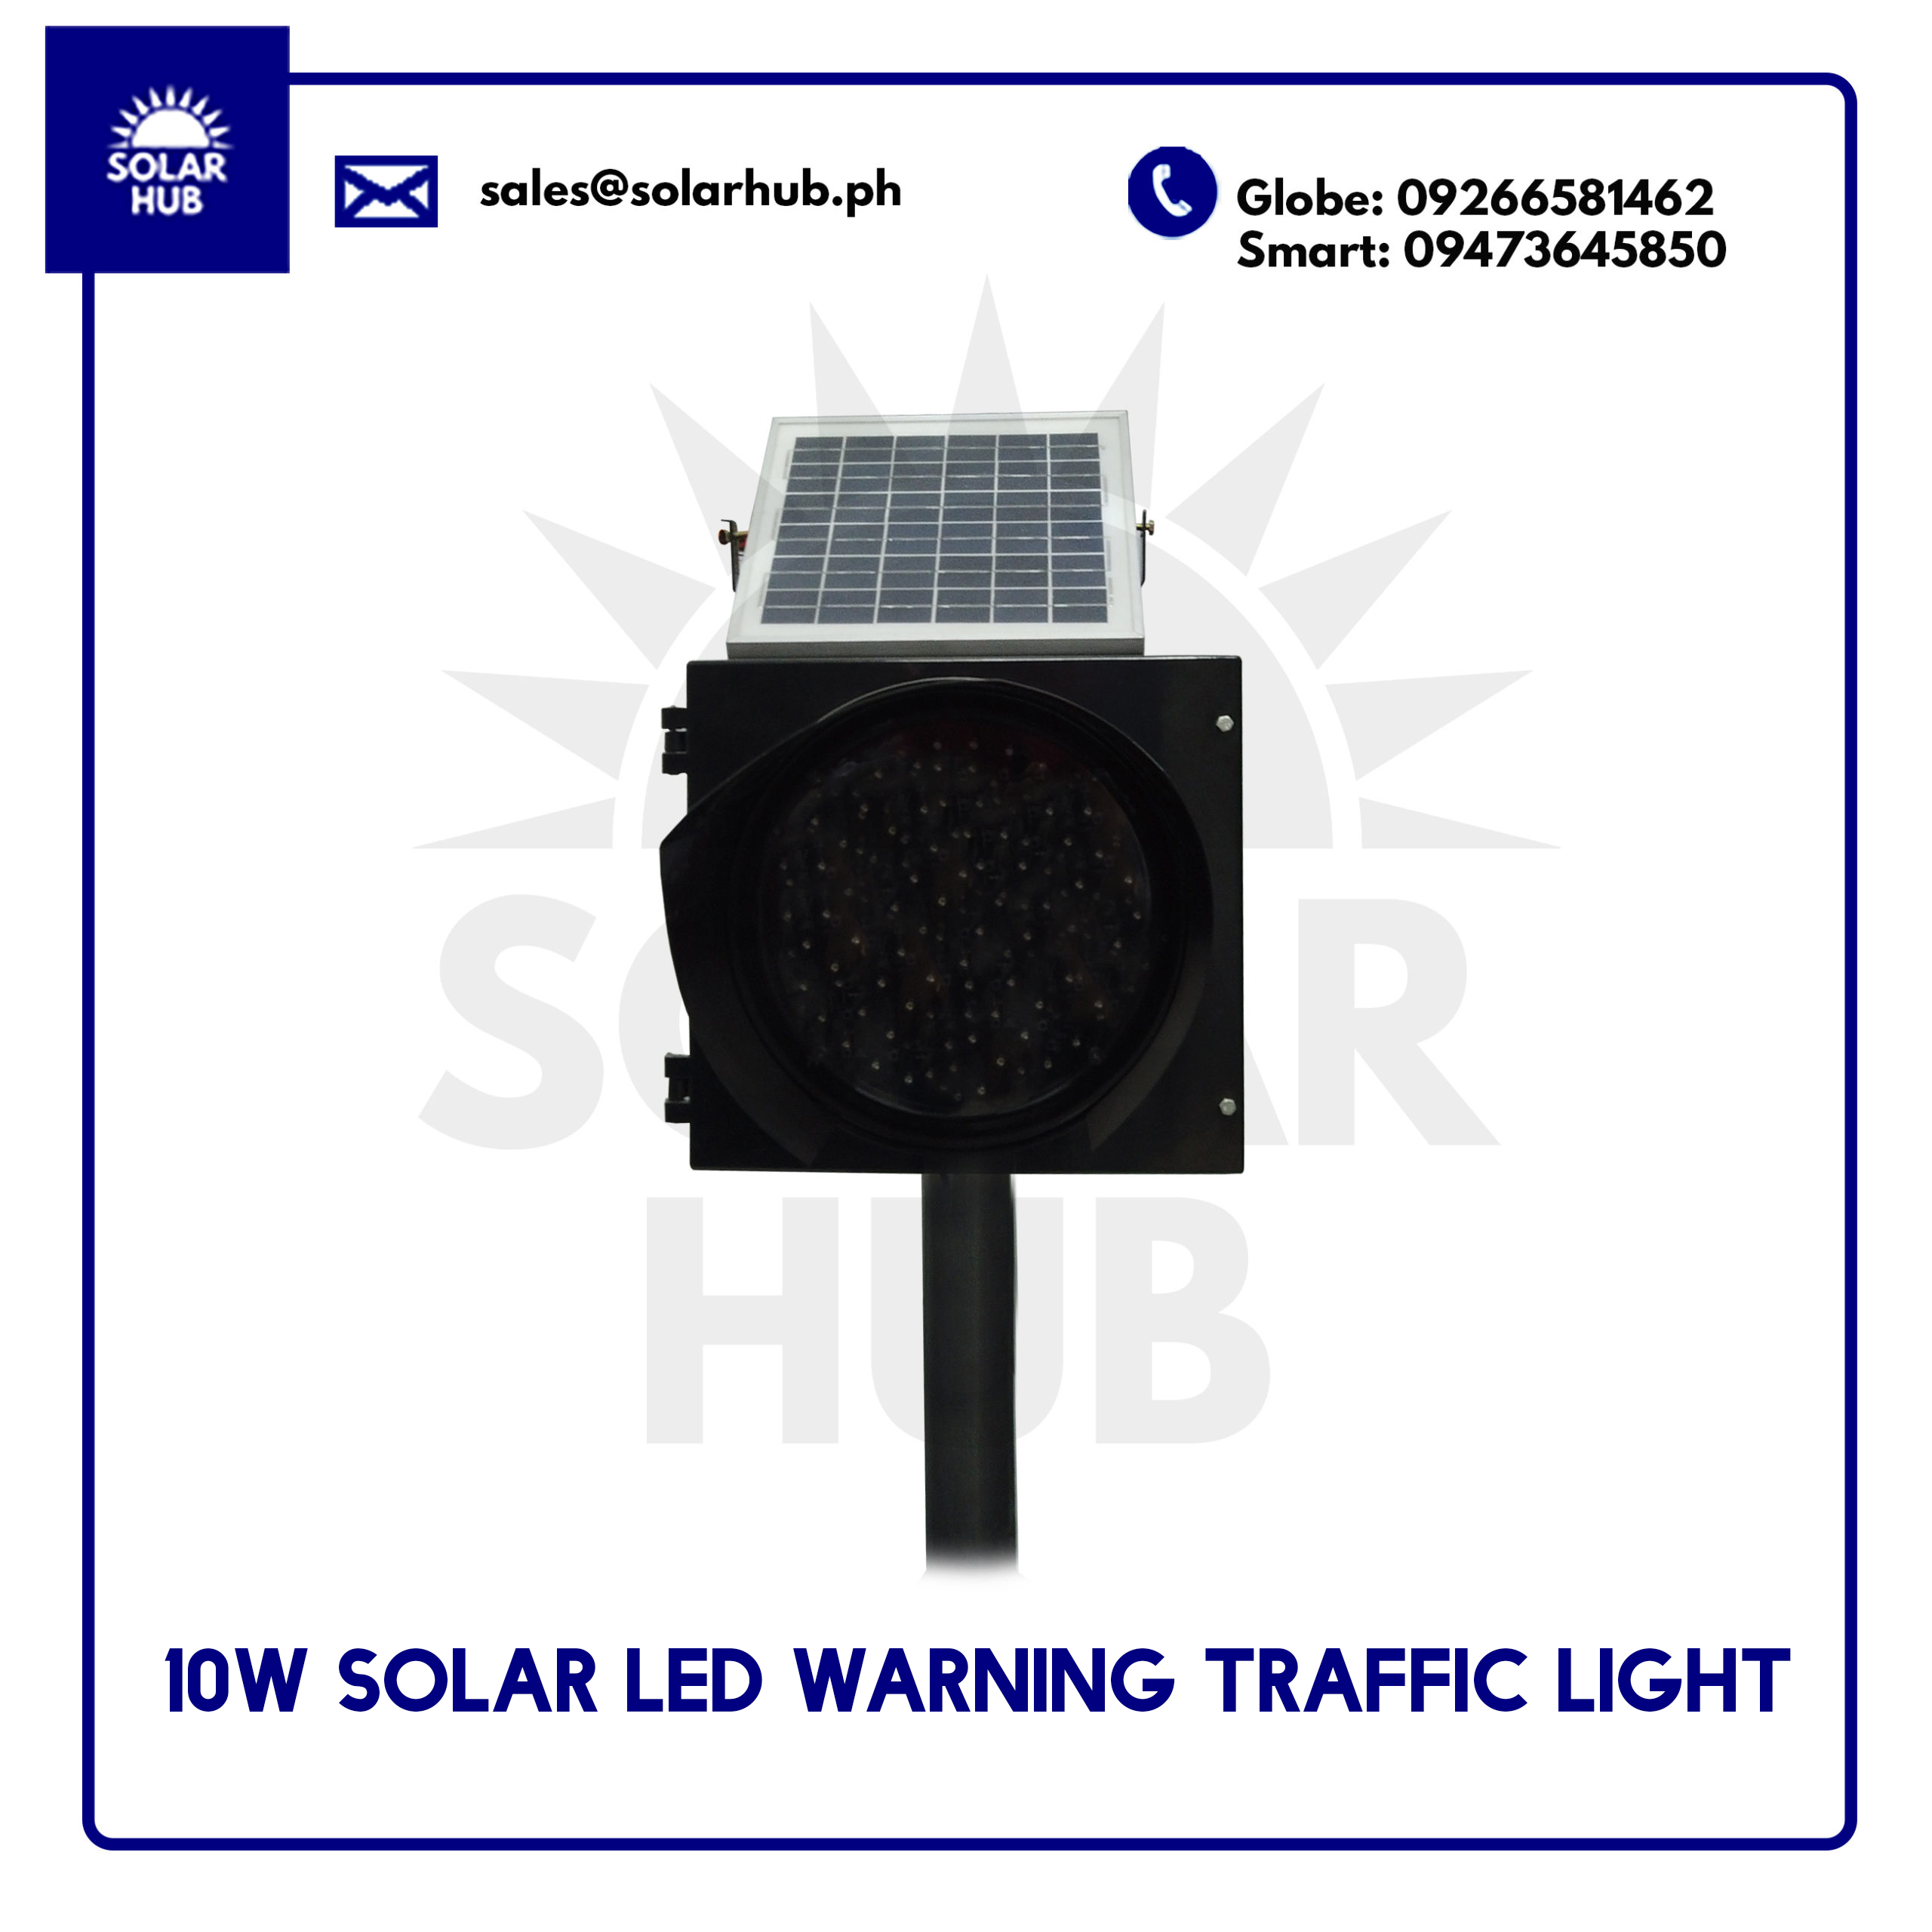 10W Solar LED Traffic Warning Light